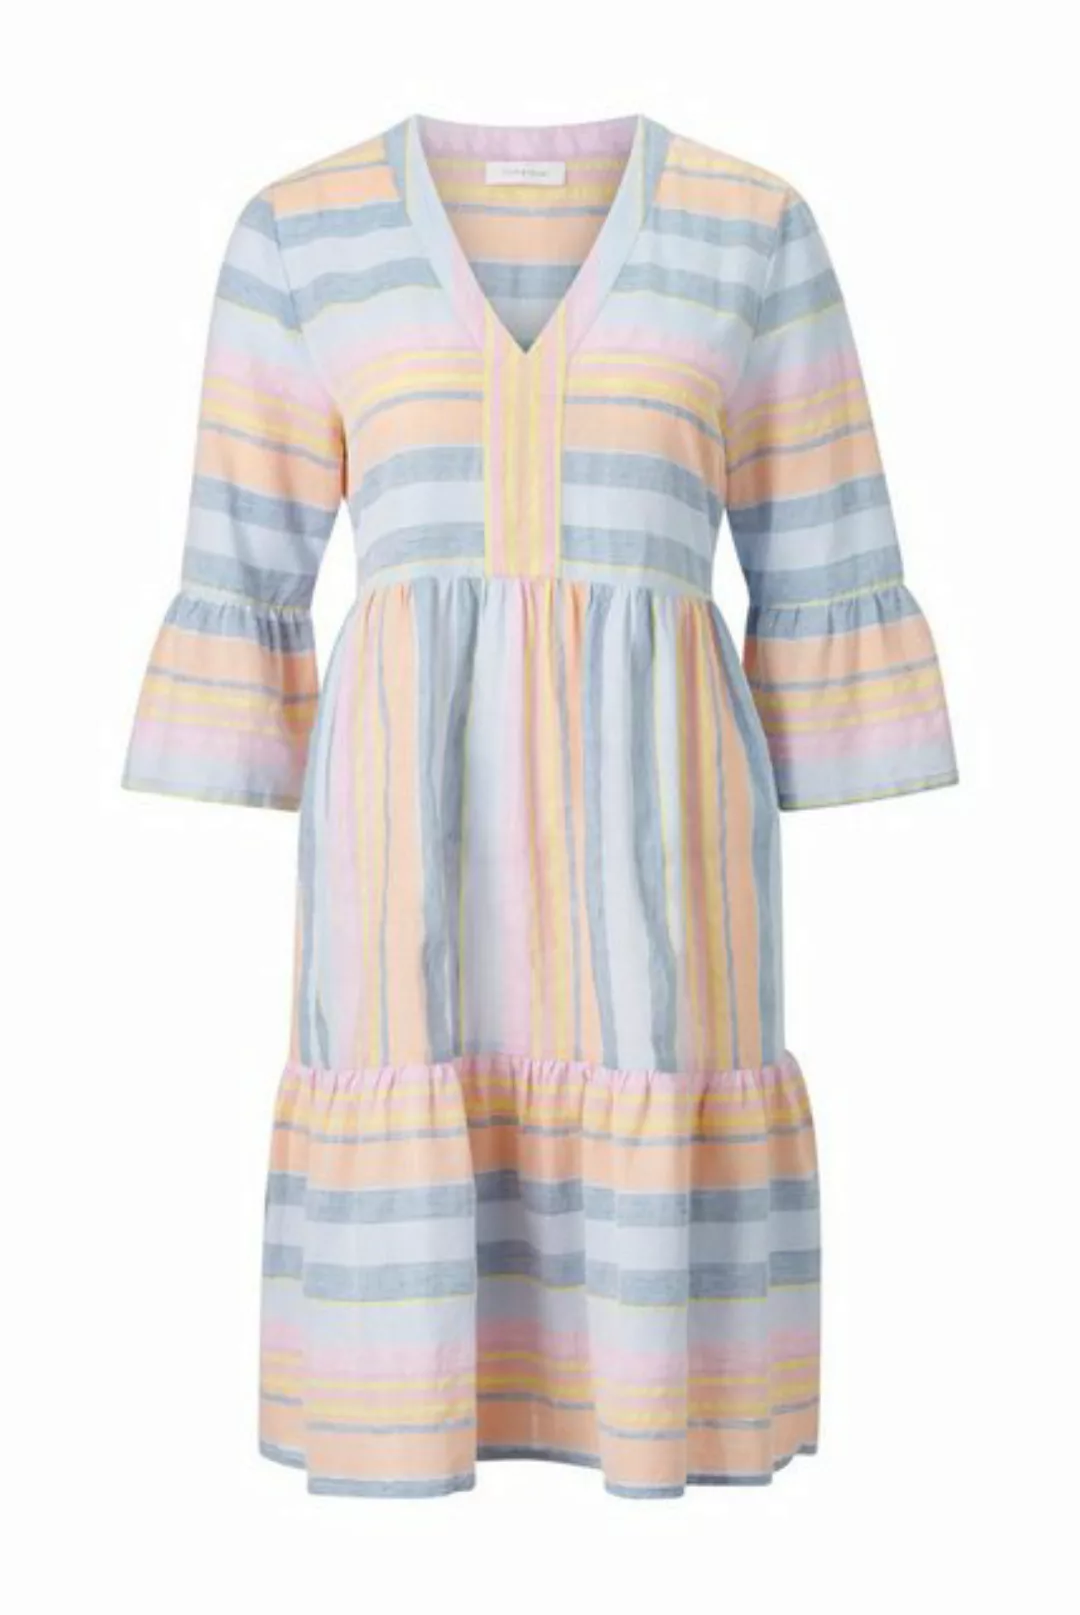 Rich & Royal Sommerkleid multicolour mini dress organic günstig online kaufen